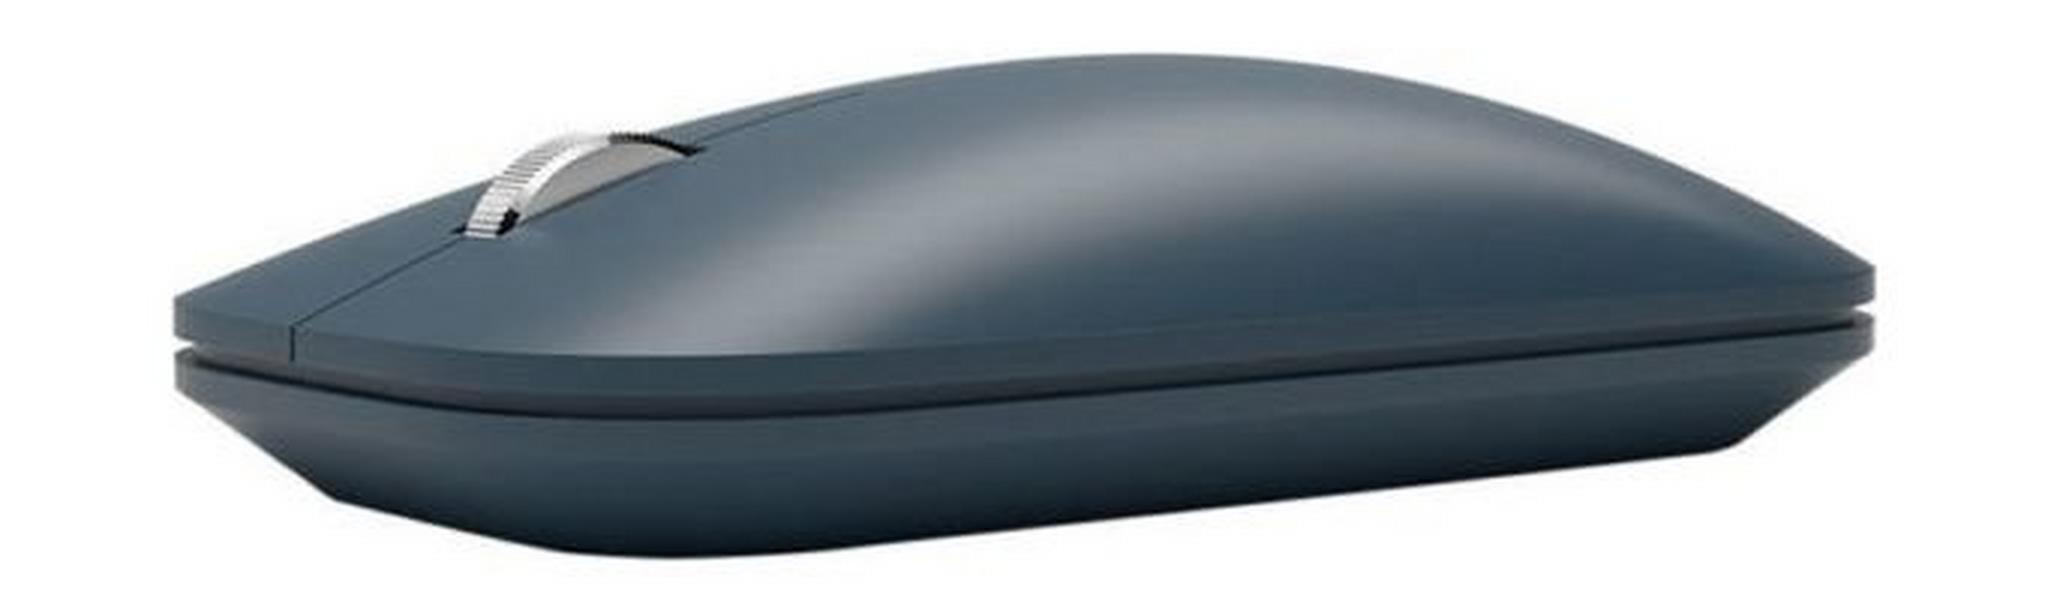 Microsoft Surface Mobile Mouse (KGY-00028) - Cobalt Blue